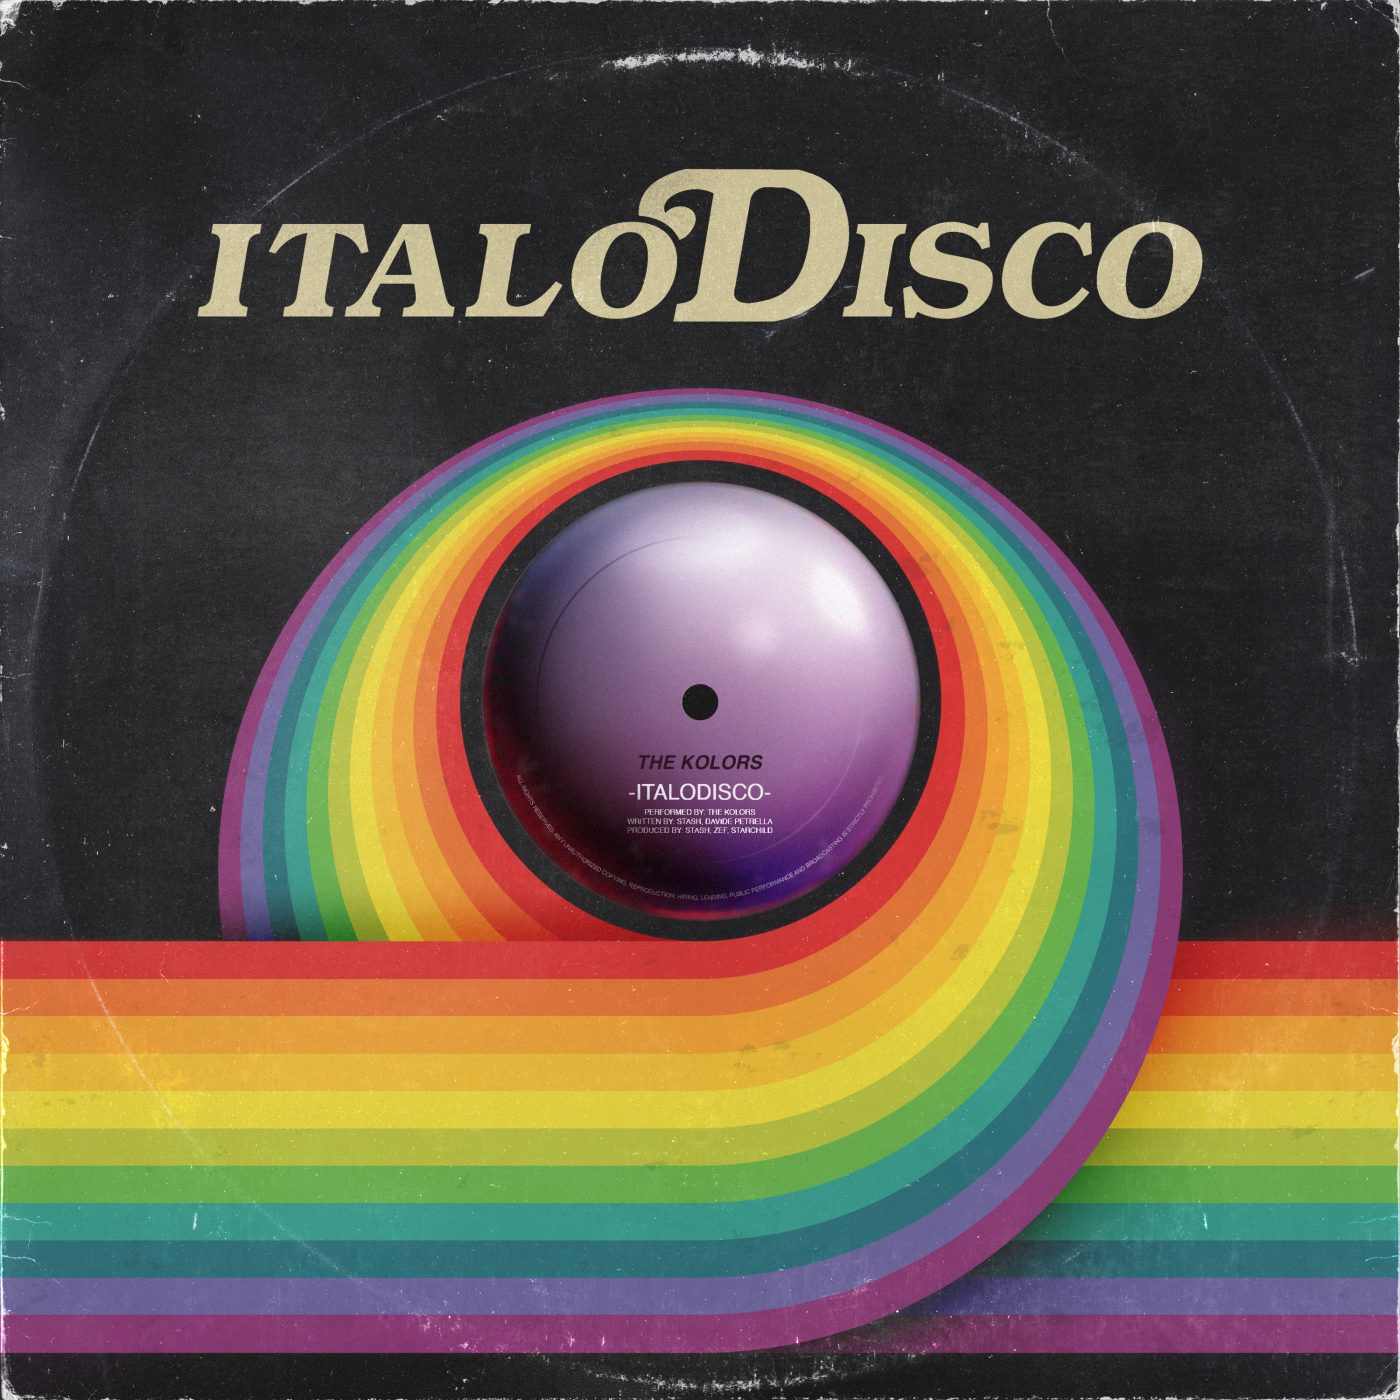 The Kolors Italodisco